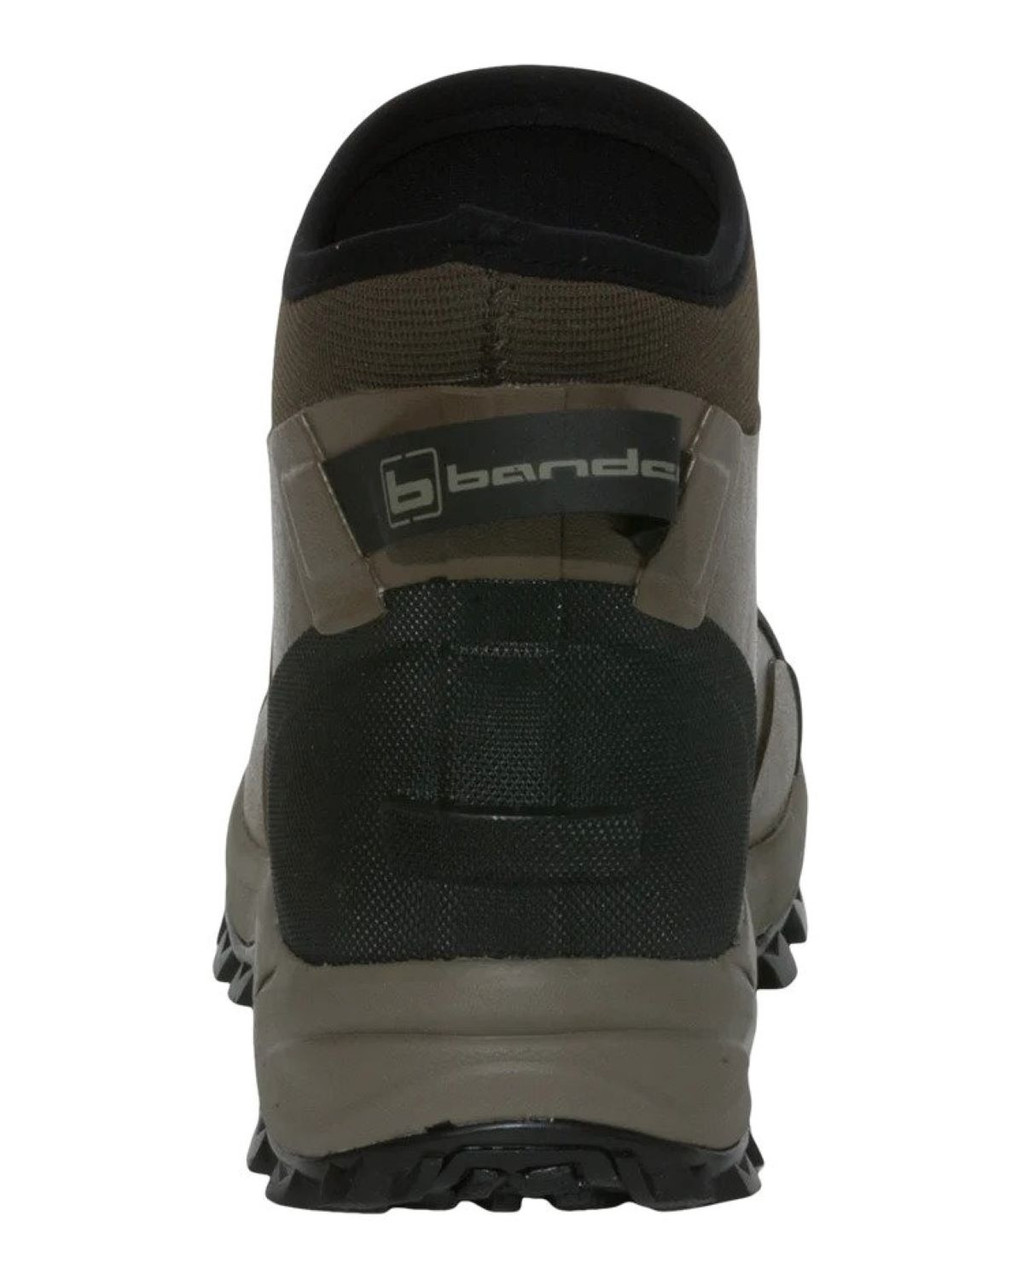 Banded Black Label Elite Series RZ Camp Shoe Rubber - Marsh Brown -Size 10